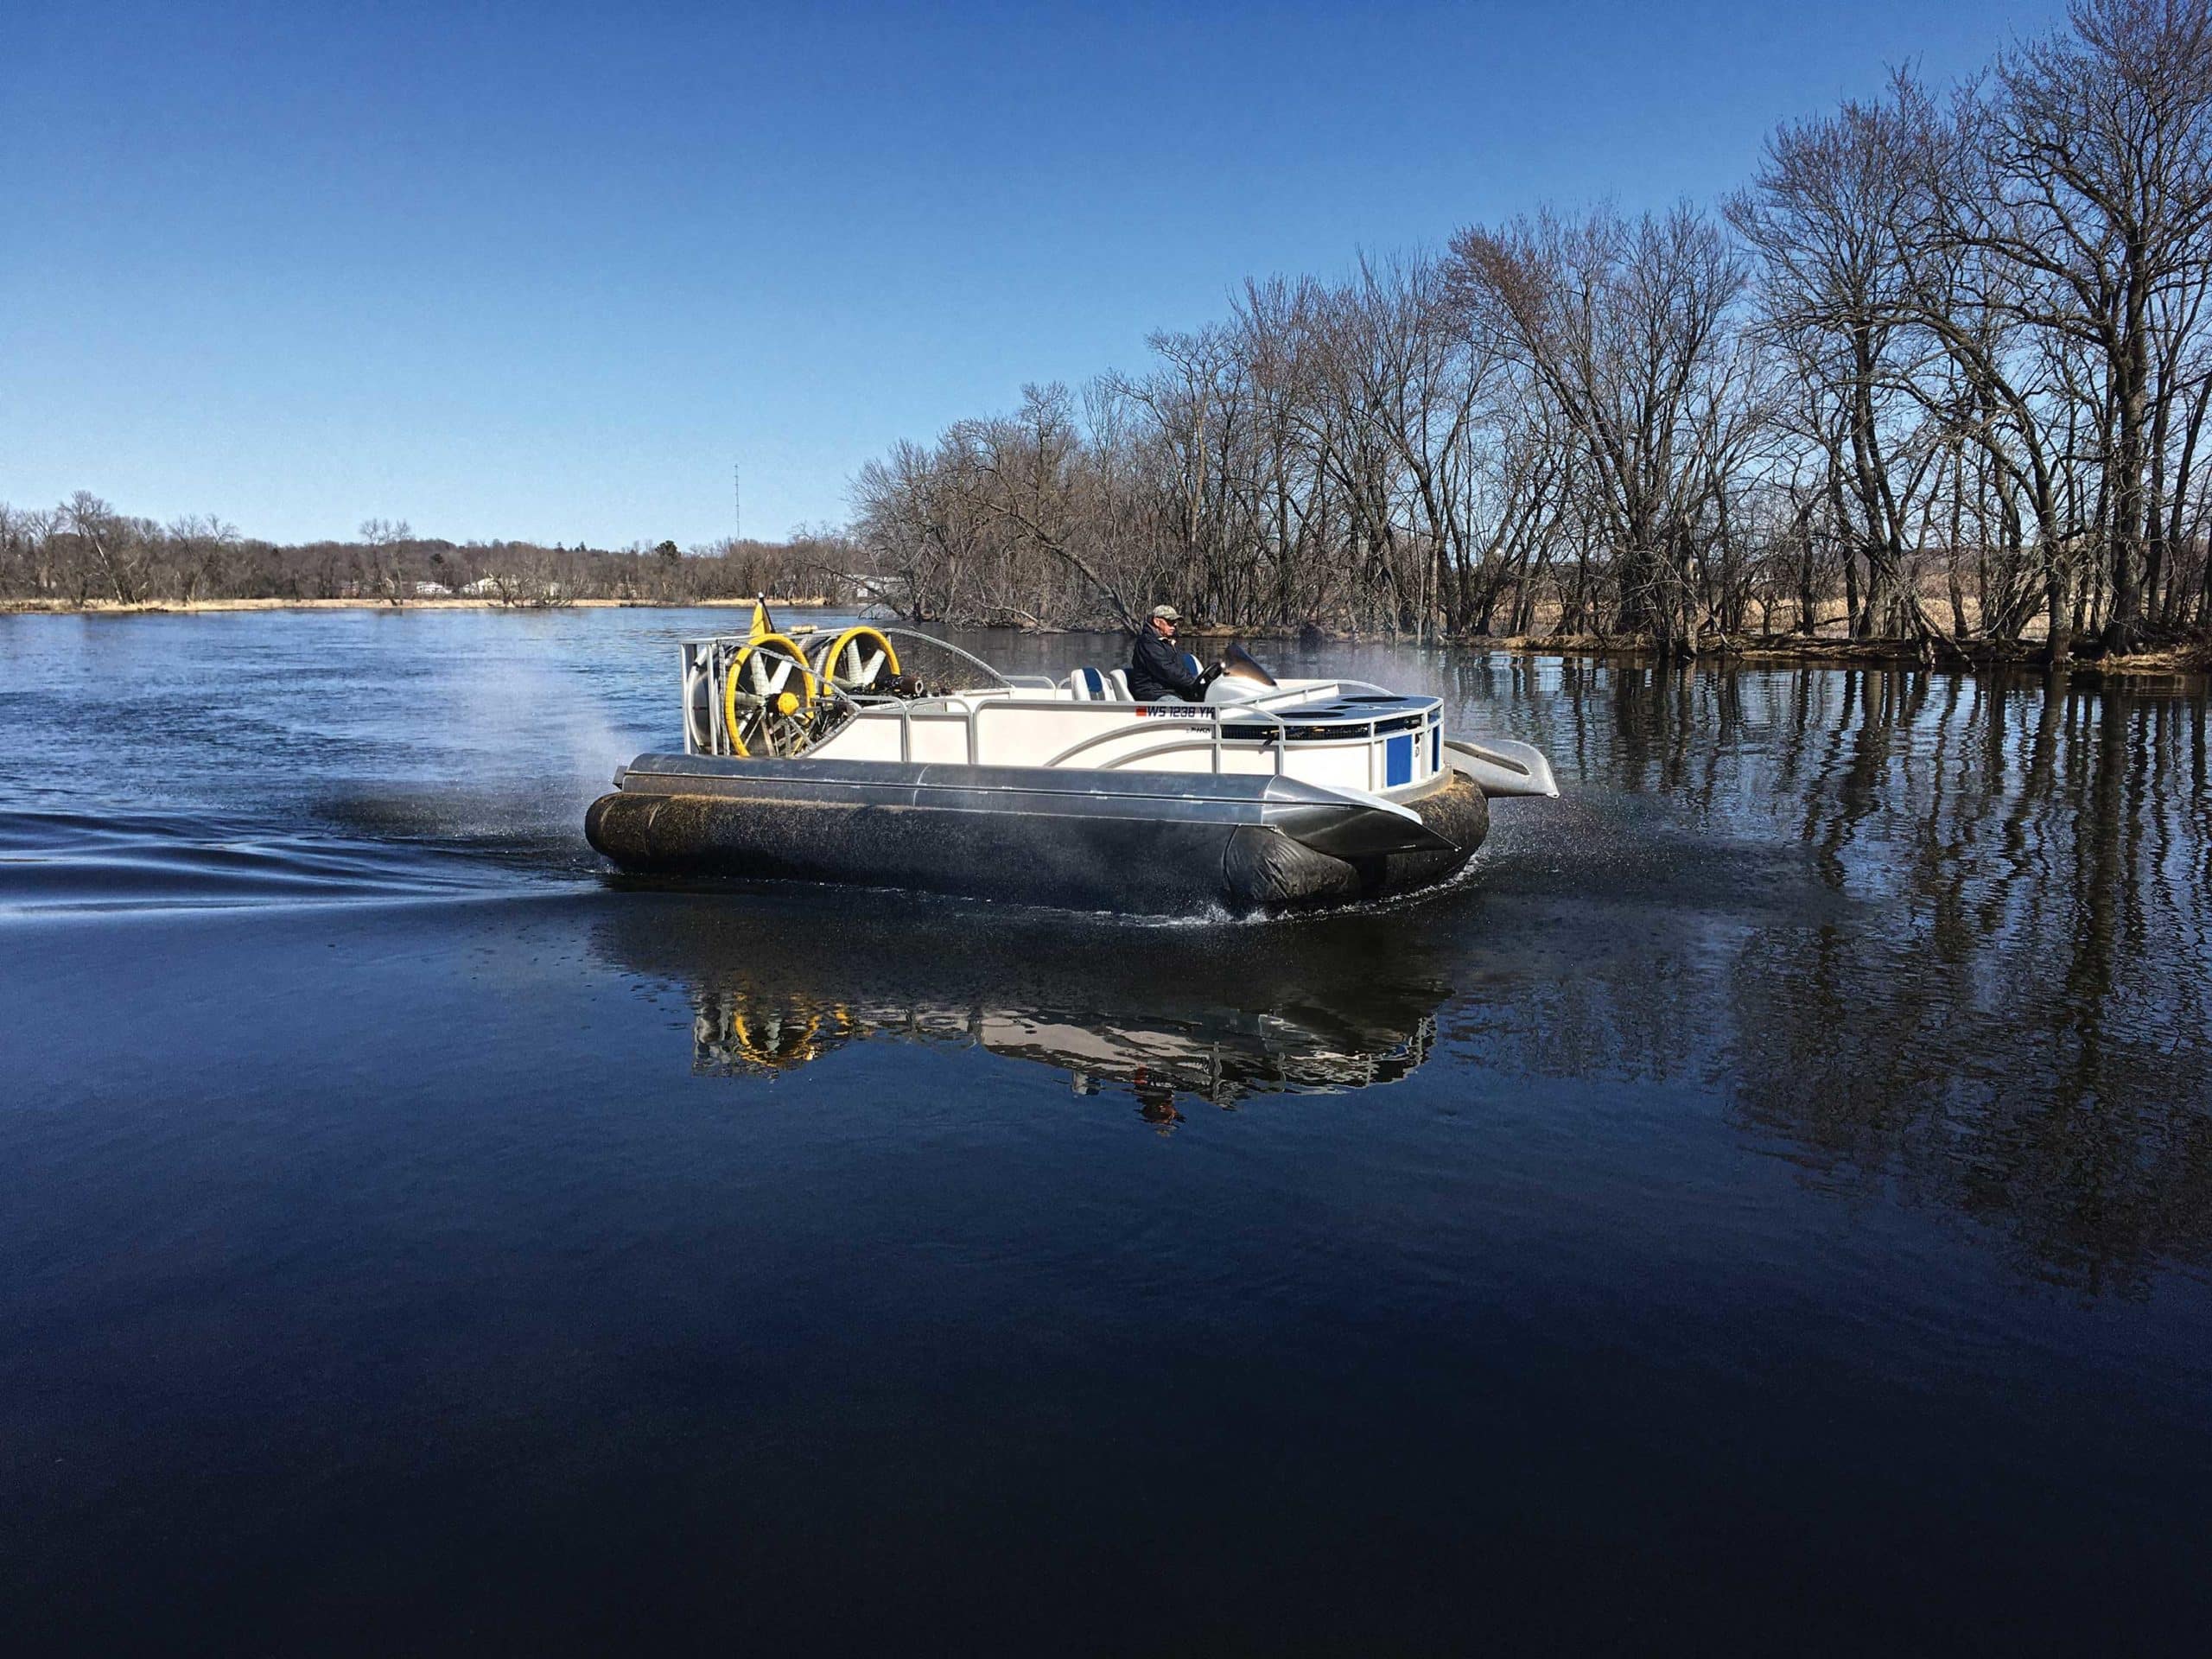 The Hovertoon: A Pontoon Boat-Hovercraft Hybrid